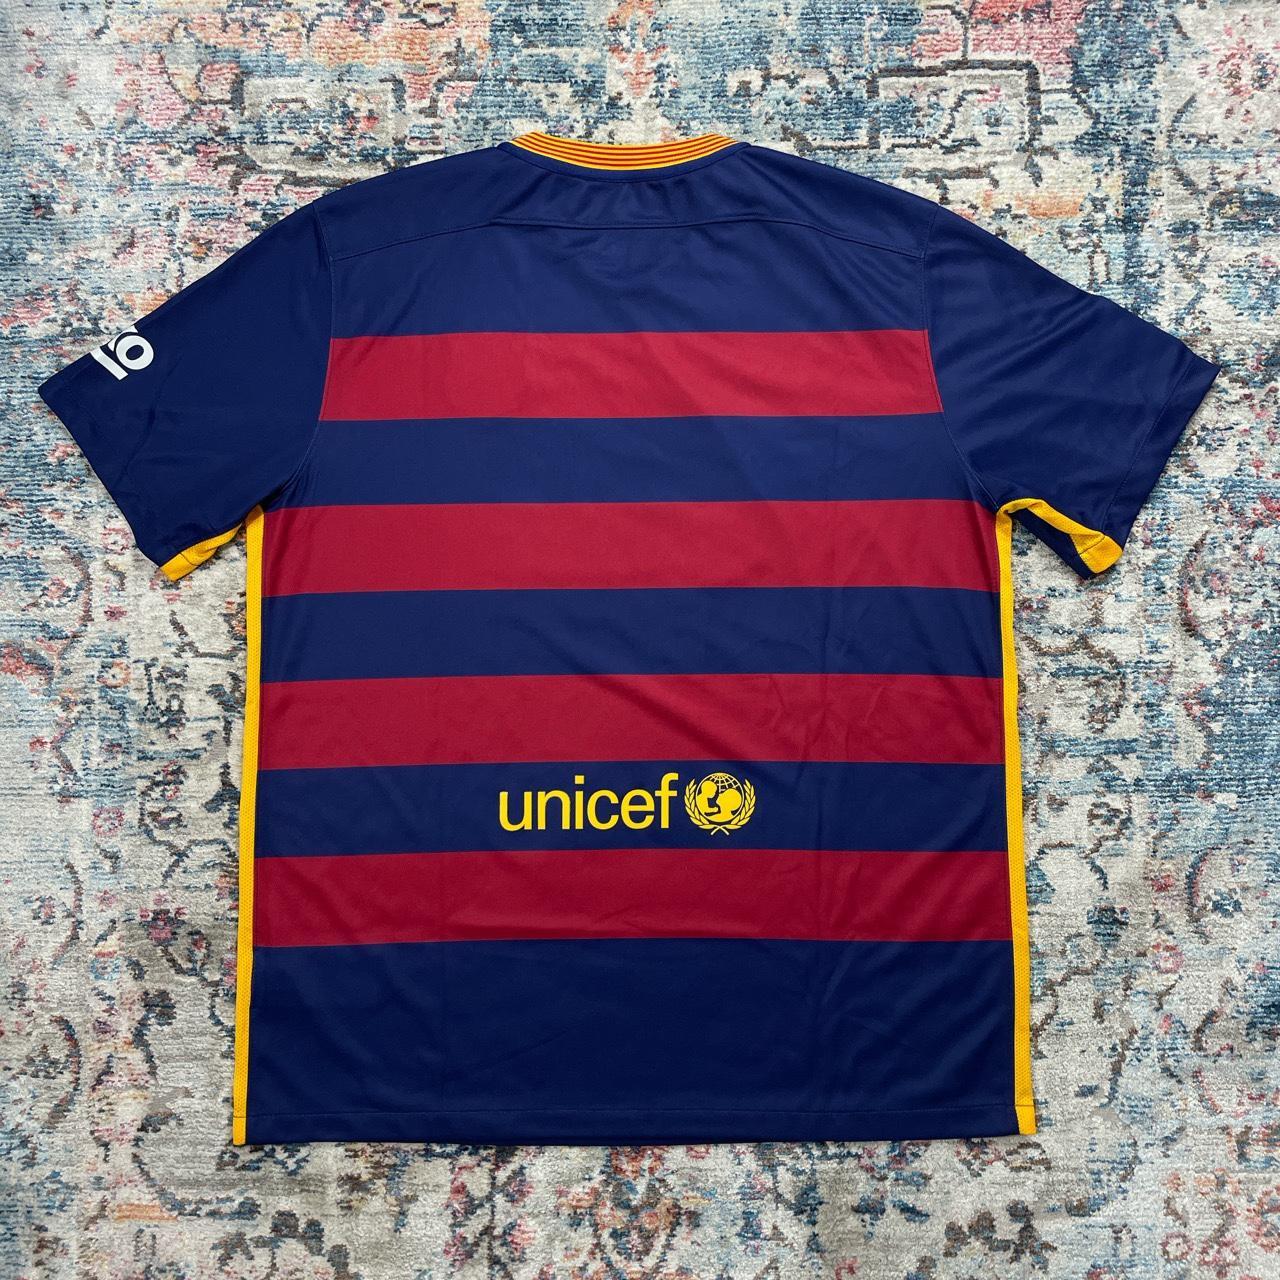 Barcelona Nike 2015/16 Home Football Shirt